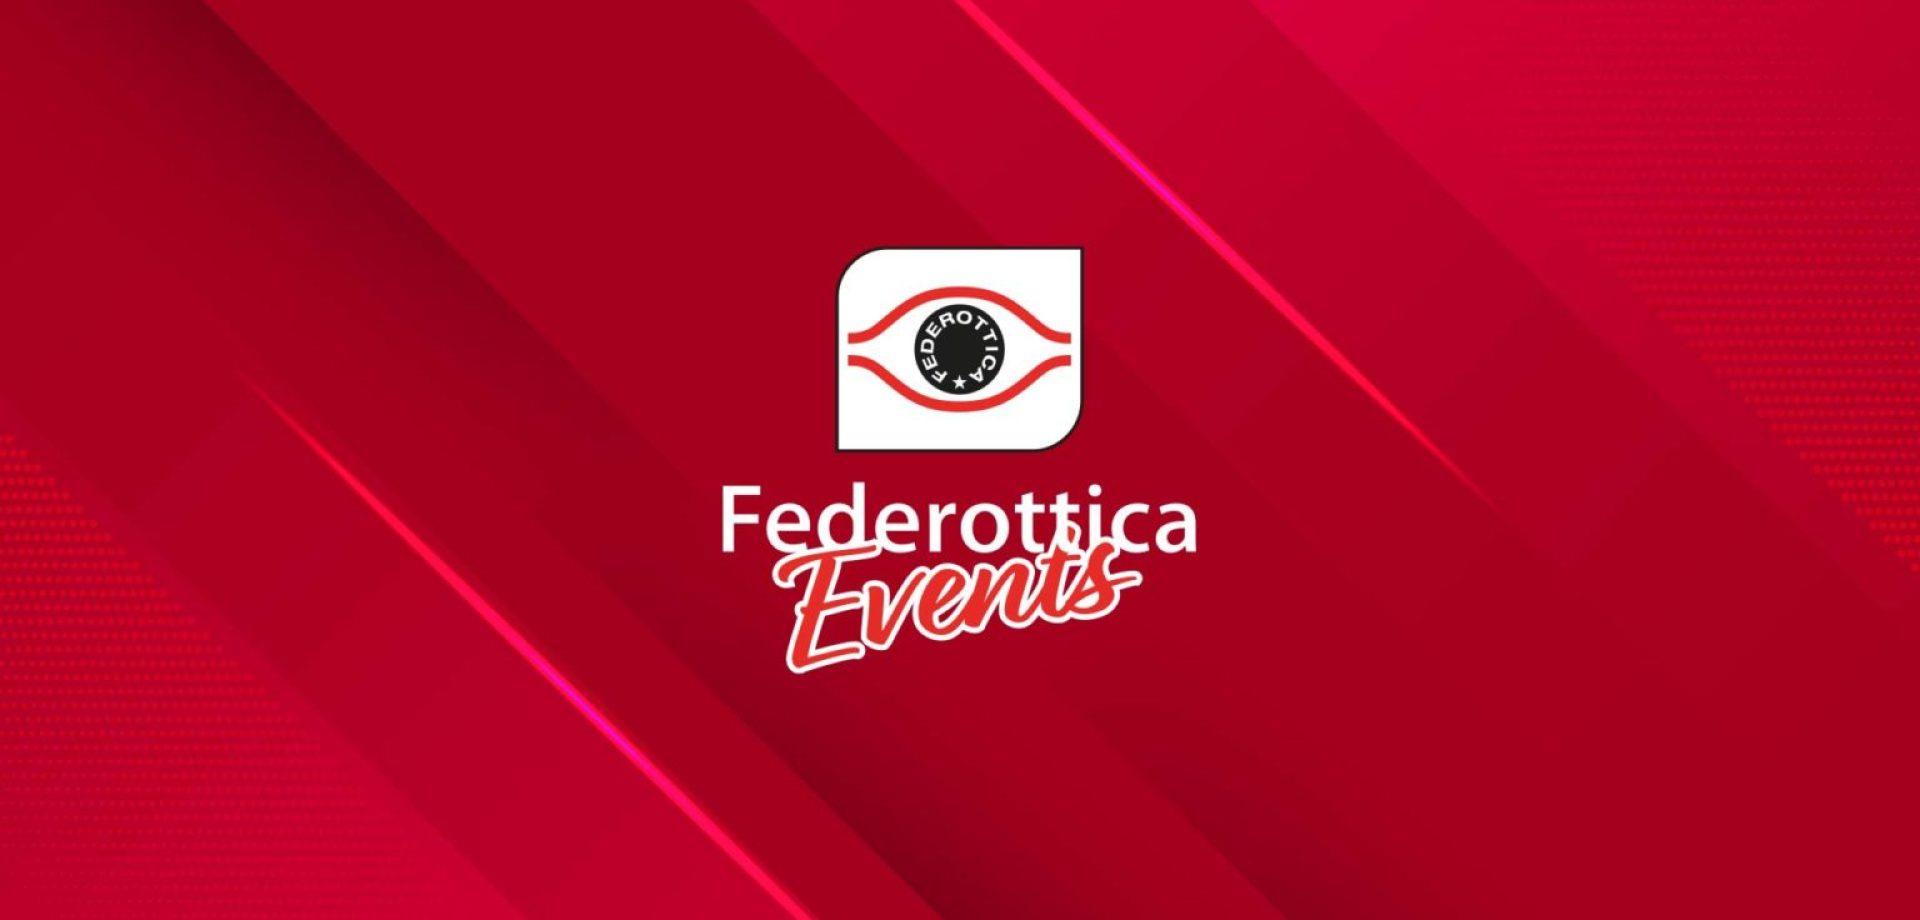 federottica-events